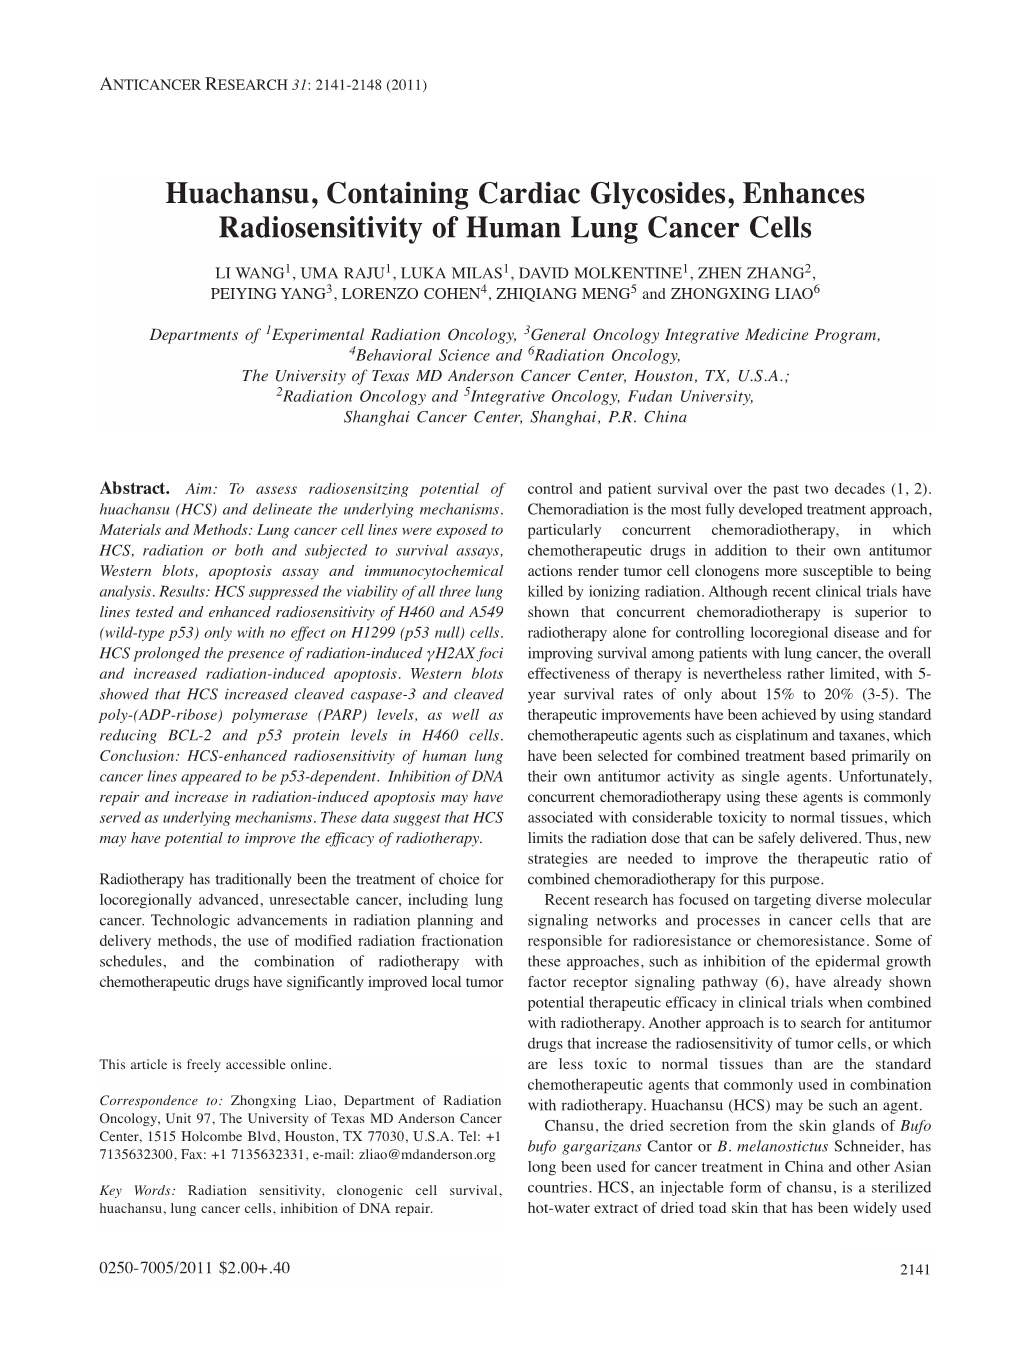 Huachansu, Containing Cardiac Glycosides, Enhances Radiosensitivity of Human Lung Cancer Cells